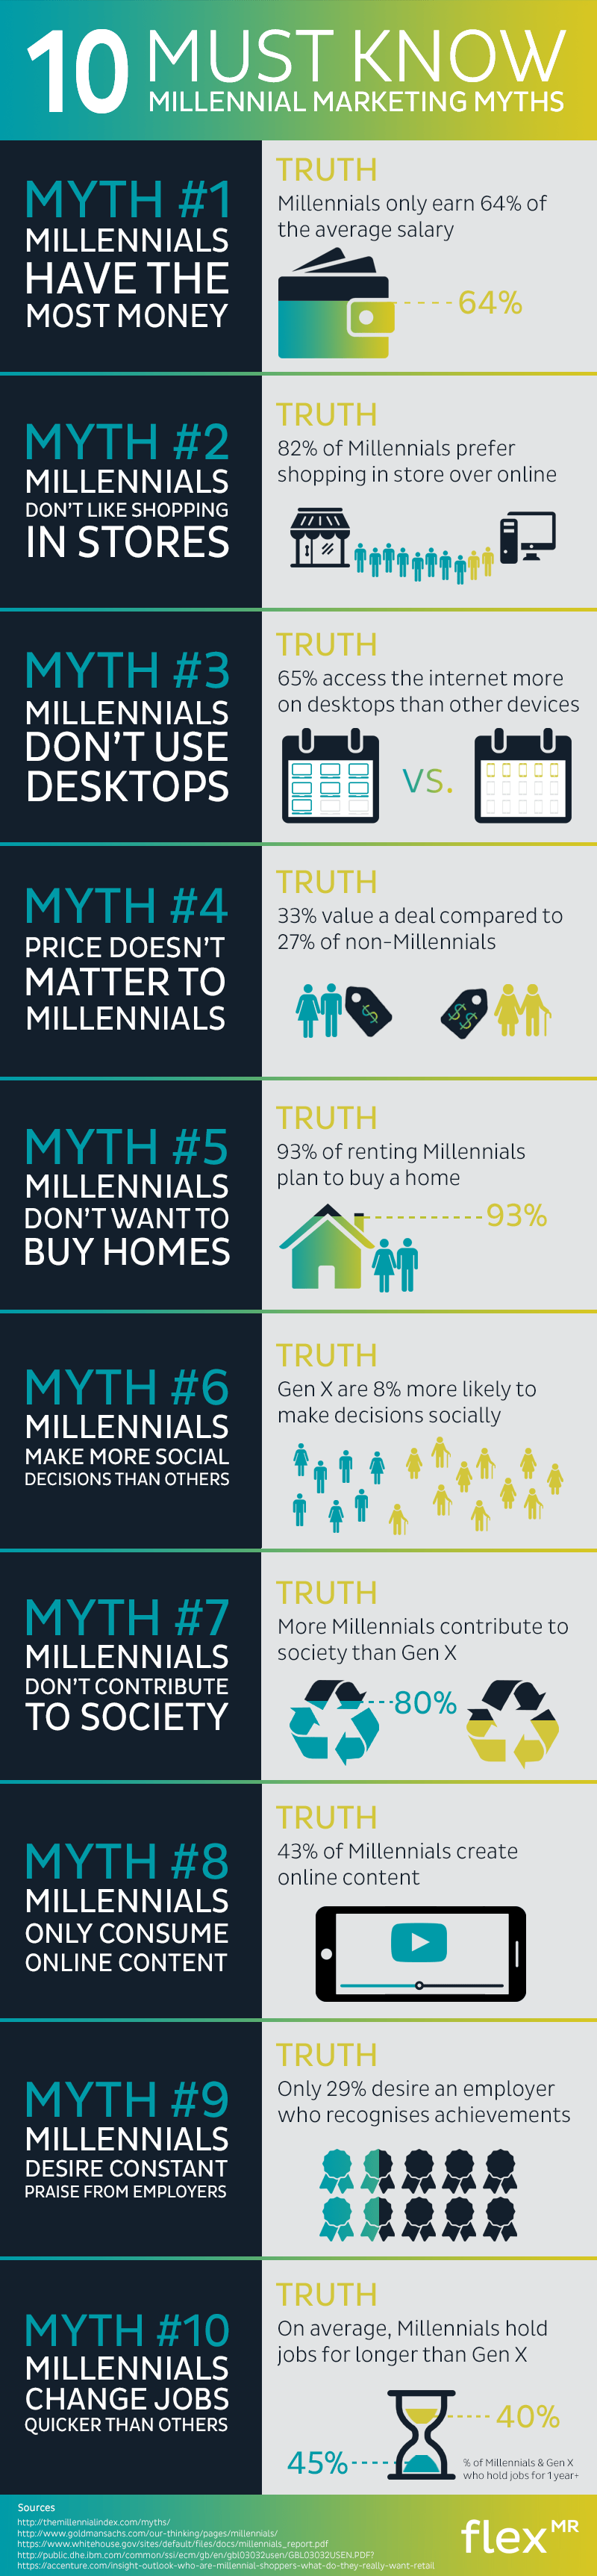 10 Must Know Millennial Marketing Myths